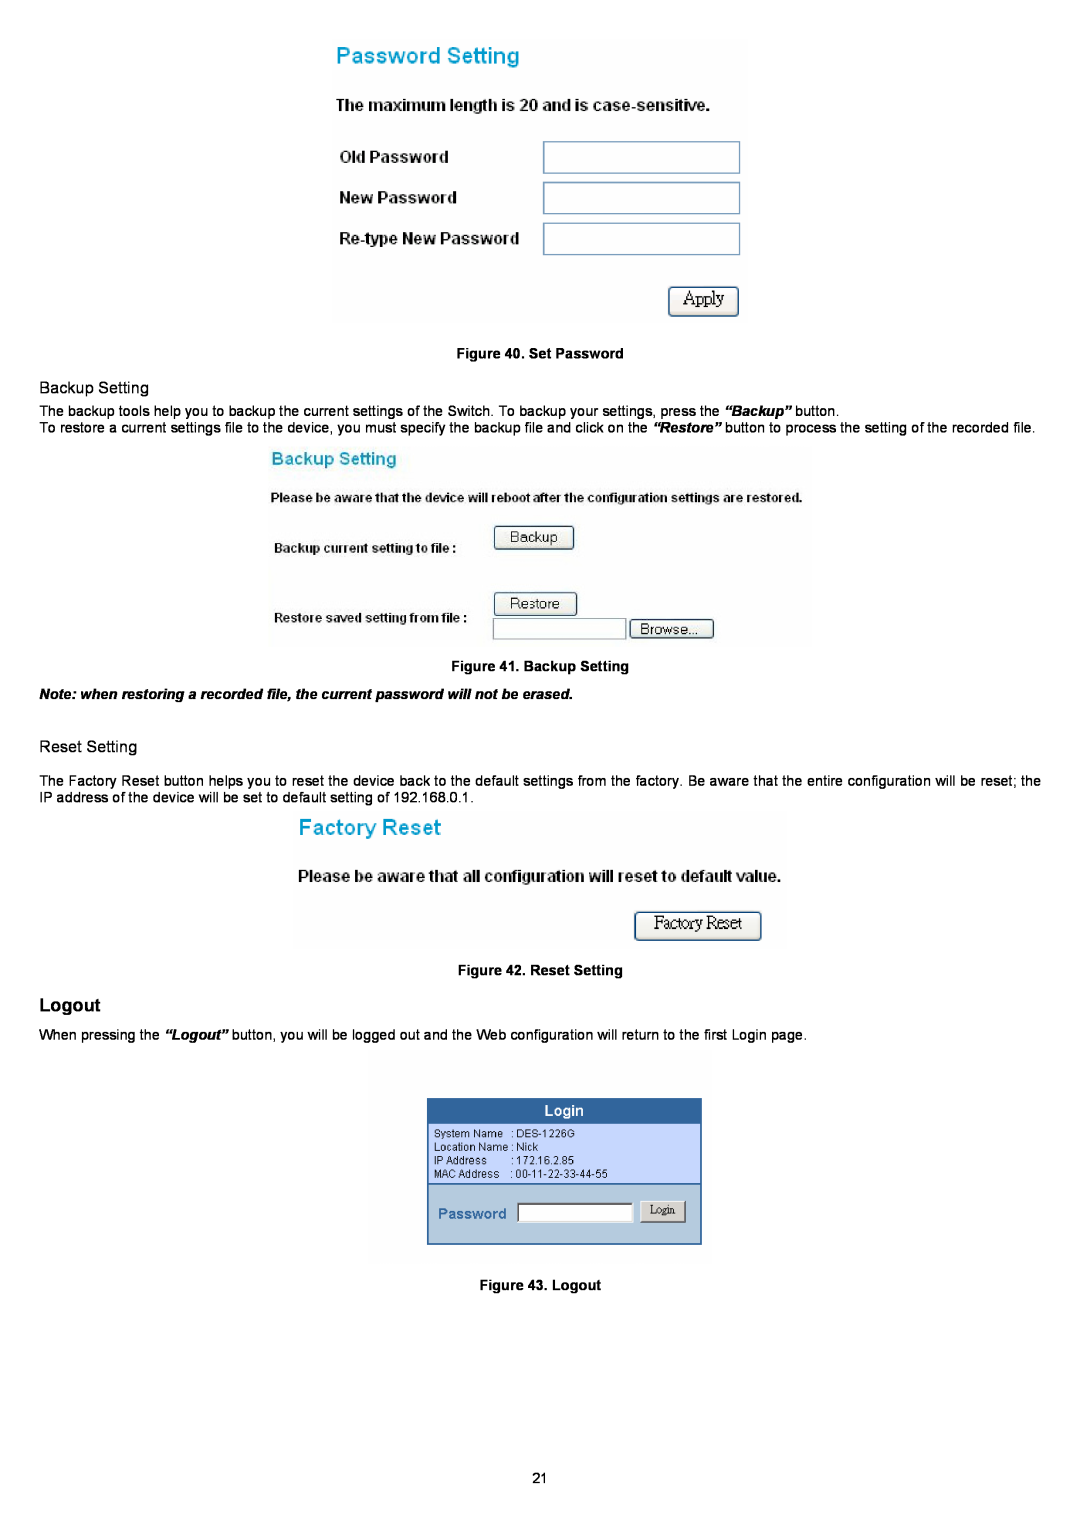 D-Link DES-1226G manual Logout, Backup Setting, Reset Setting, Set Password 